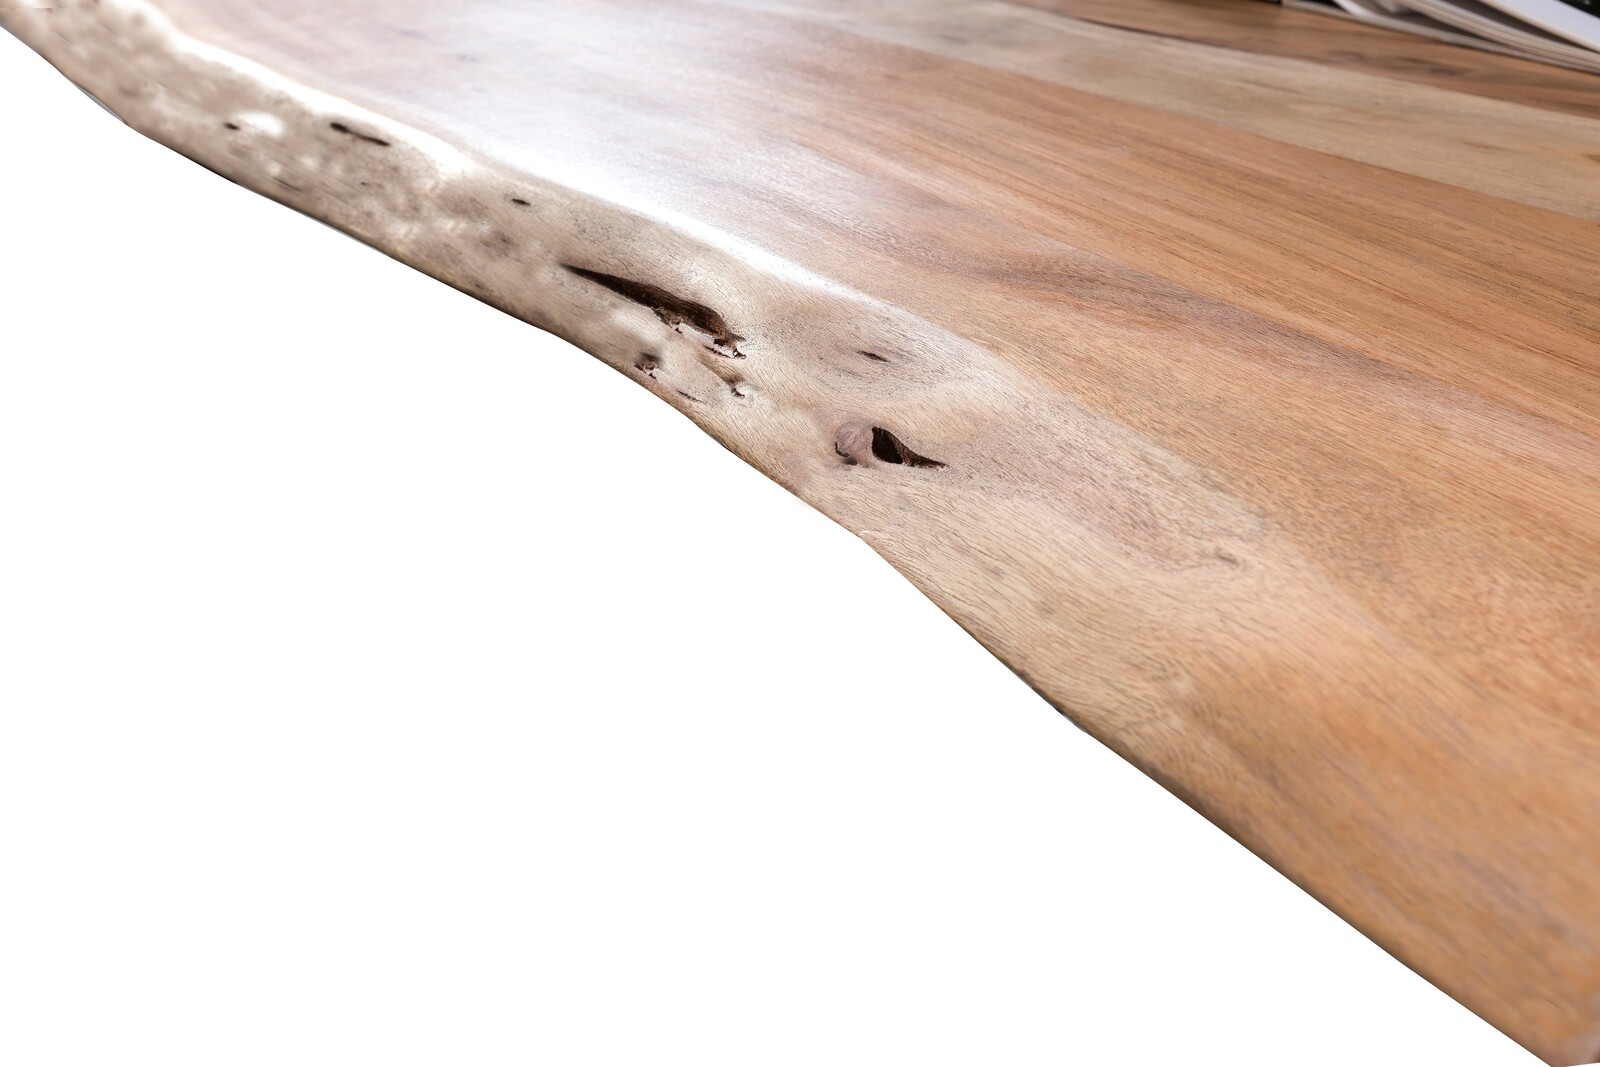 Baumkante-Esstisch TABLES & CO 120 x 80 cm Akazie natur